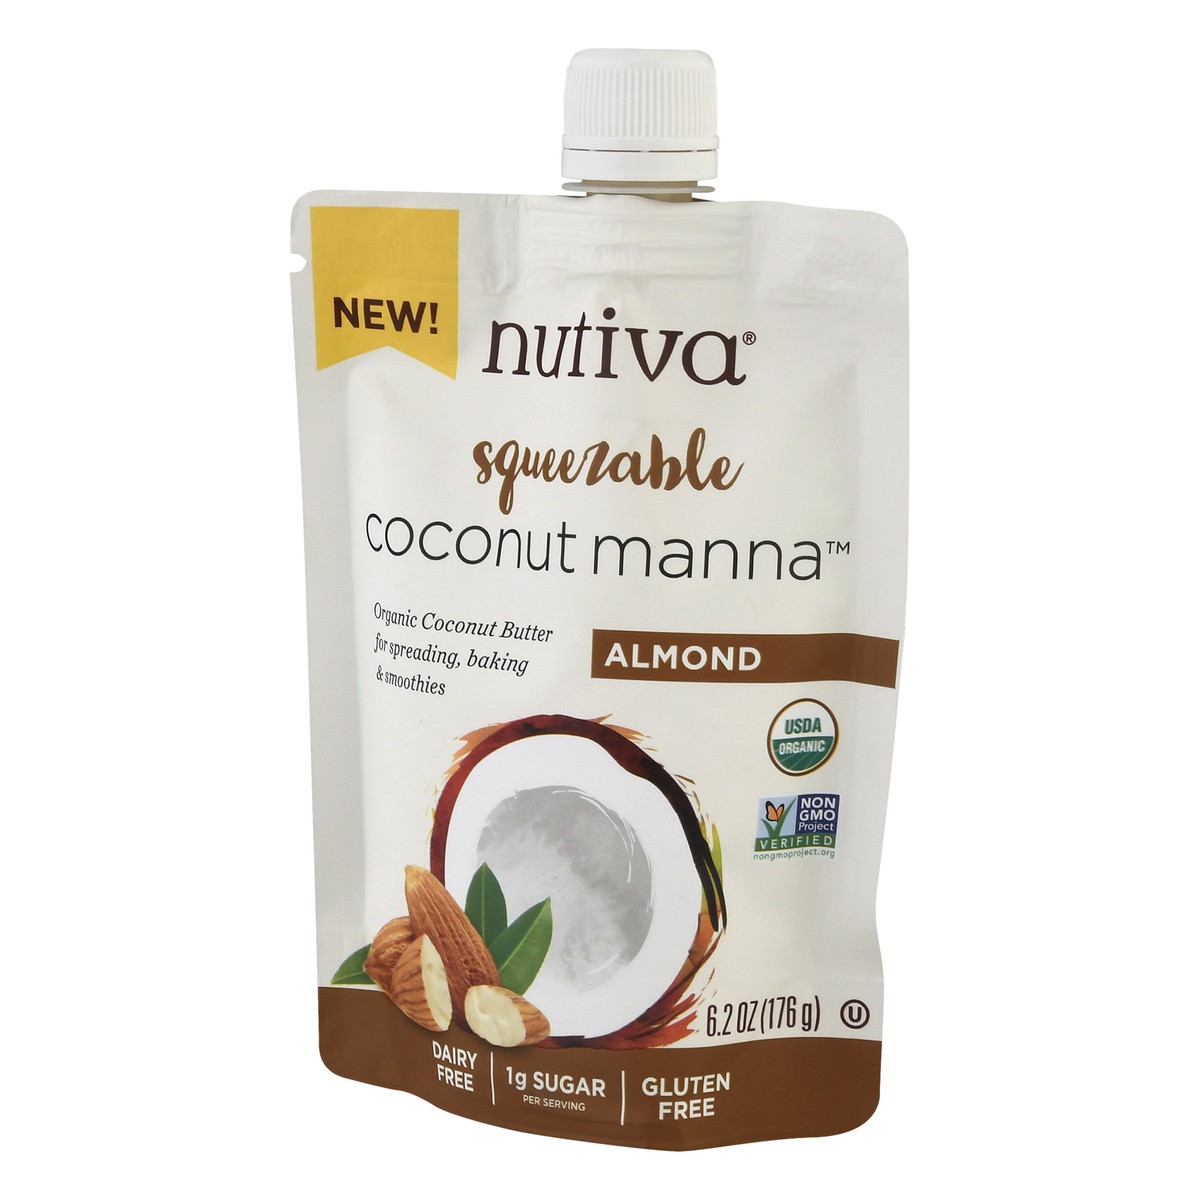 slide 7 of 12, Nutiva Squeezable Almond Coconut Manna 6.2 oz, 6.2 oz